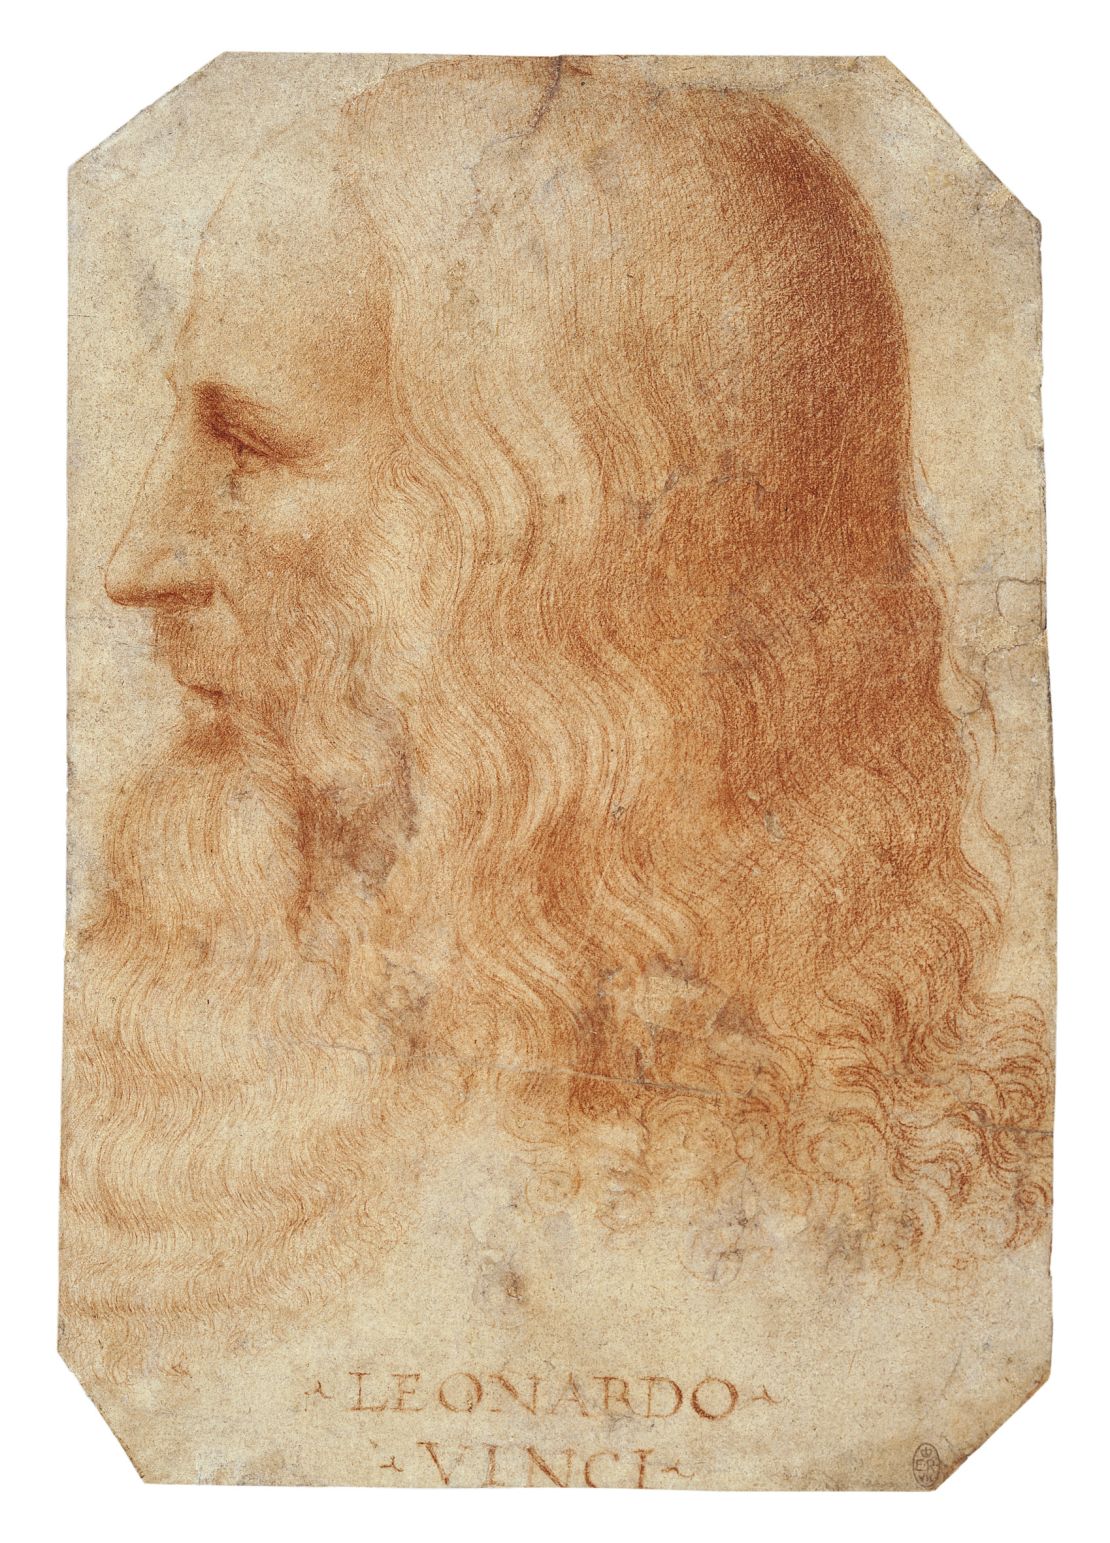 Detail of drawing of Leonardo da Vinci, by Francesco Melzi (1493-1570), c. 1515. 
